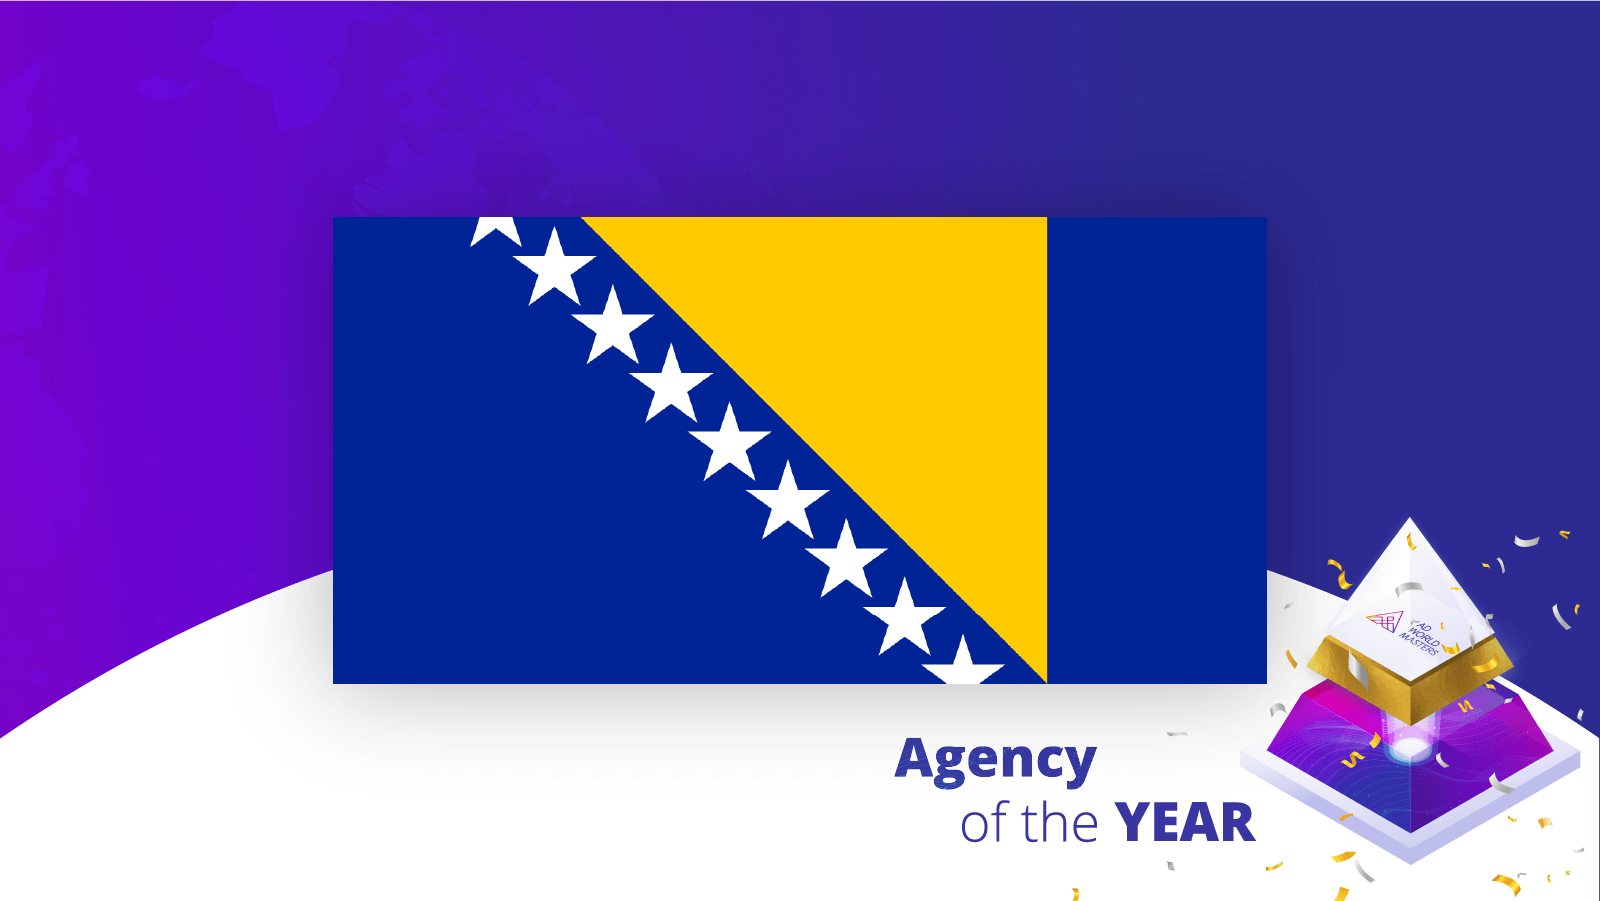 Agencies of the Year Bosnia and Herzegovina